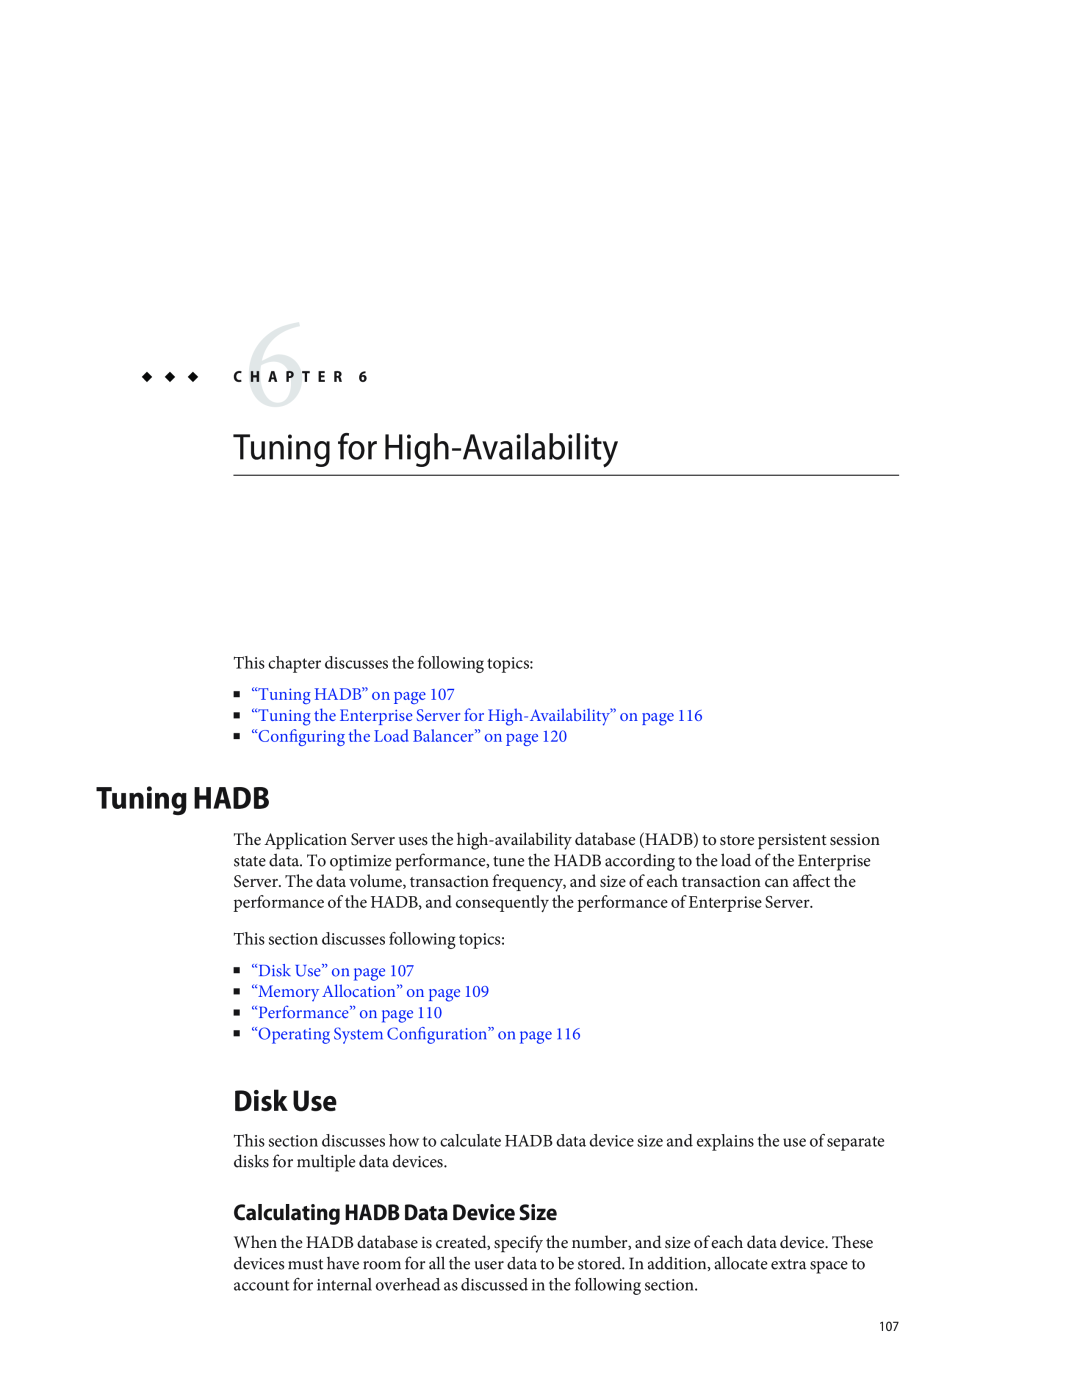 Sun Microsystems 820434310 manual Tuning for High-Availability, Tuning HADB, Disk Use, Calculating HADB Data Device Size 